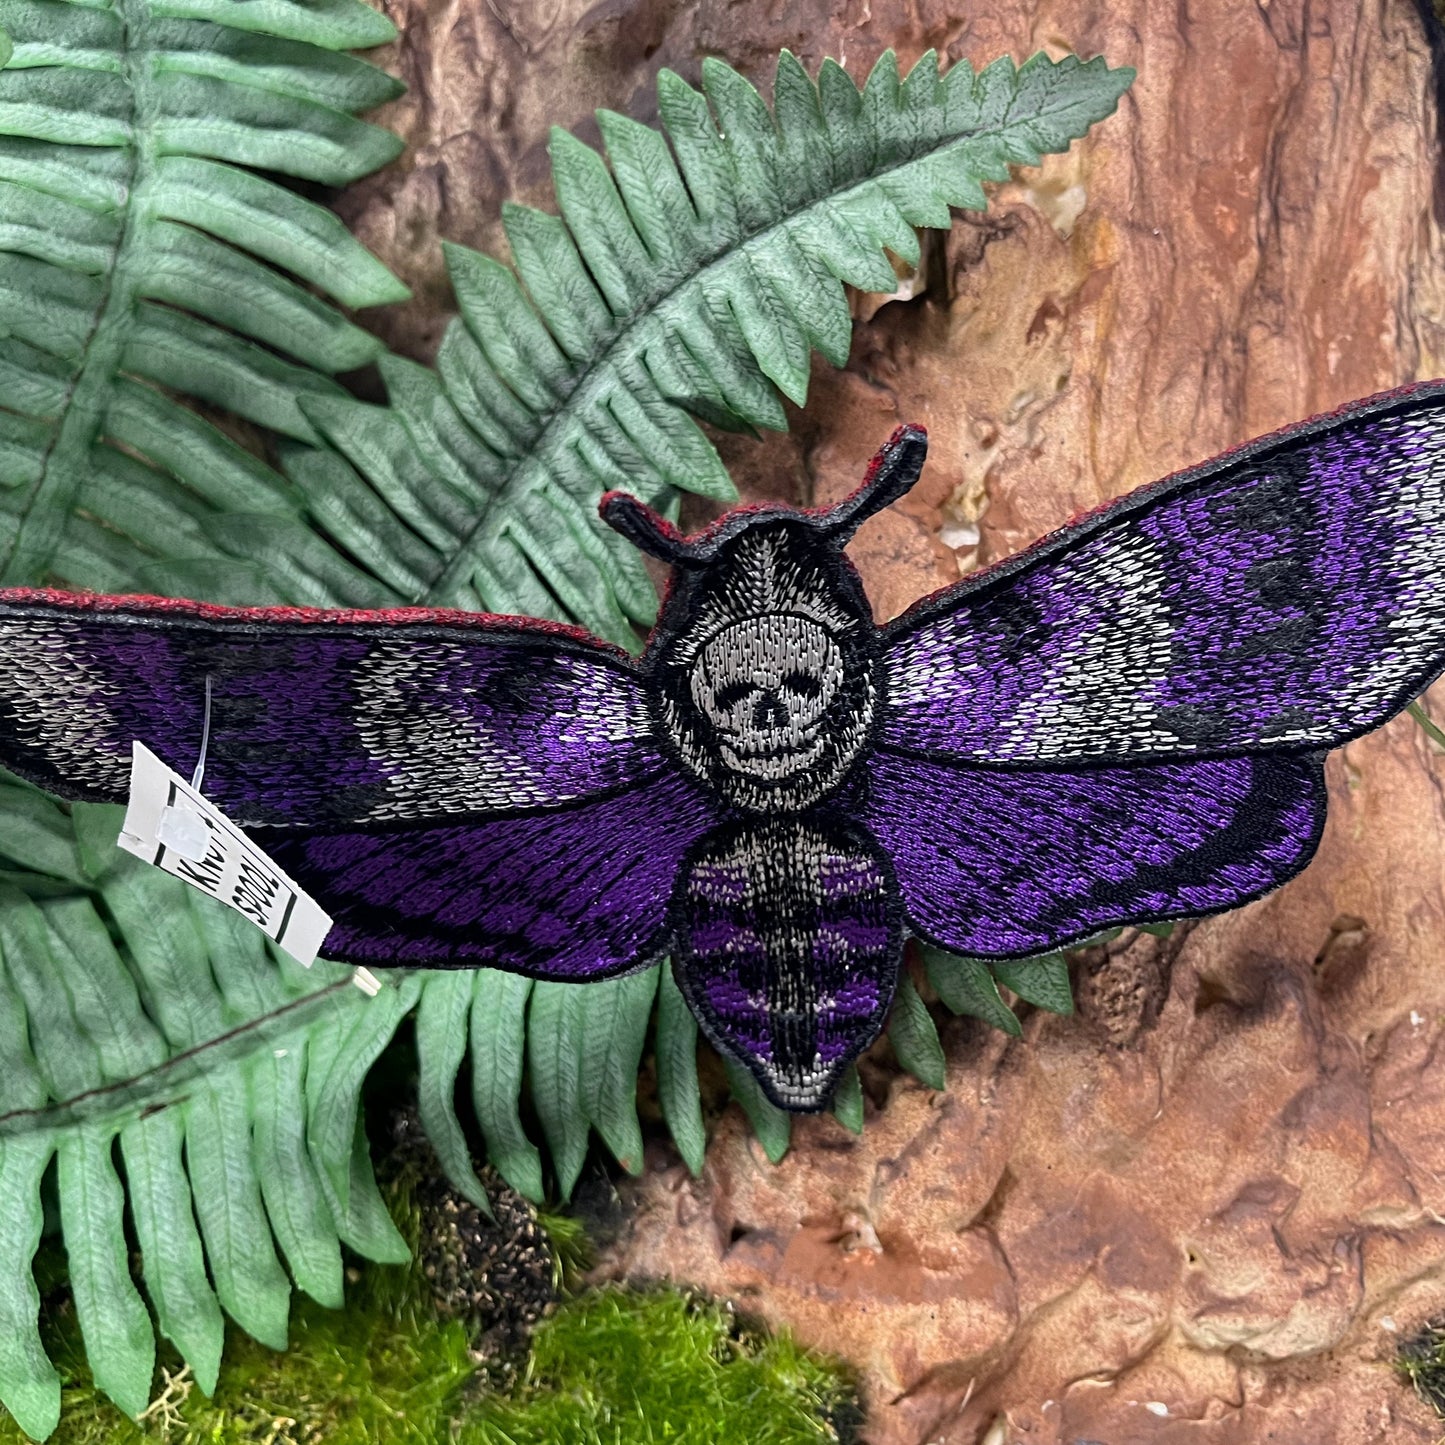 Purple and Black Moth Halloween Ornament